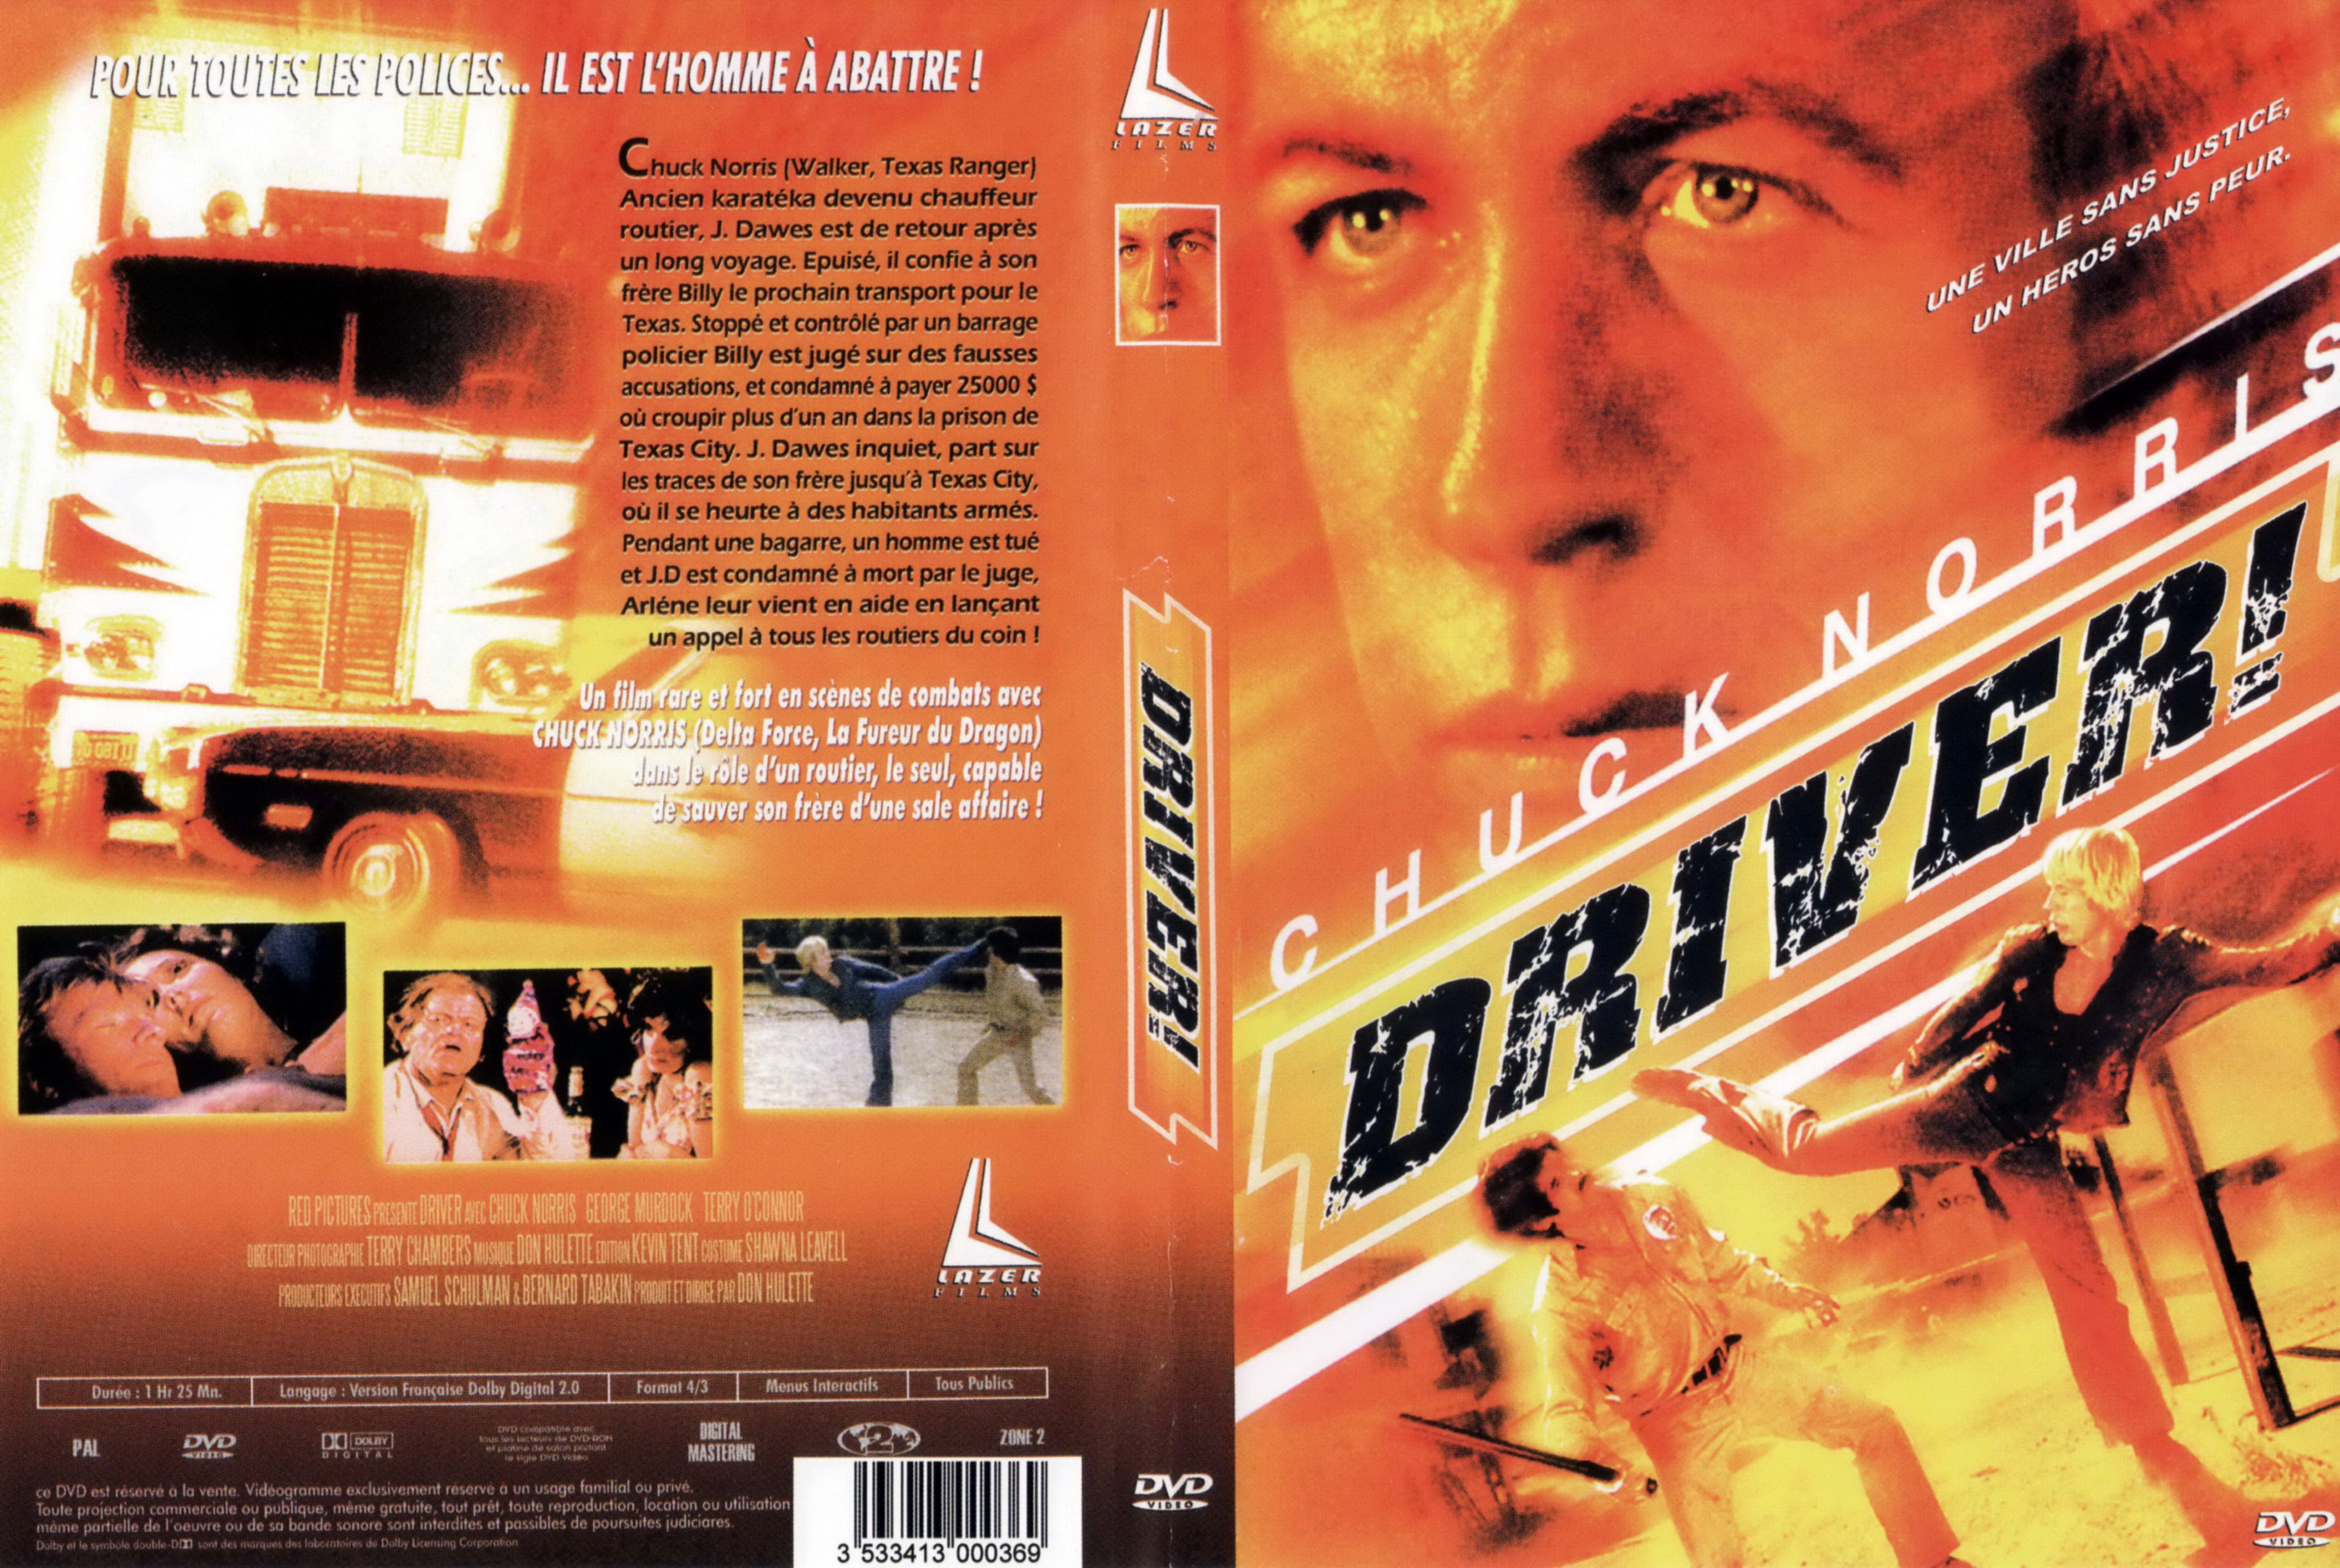 Jaquette DVD Driver